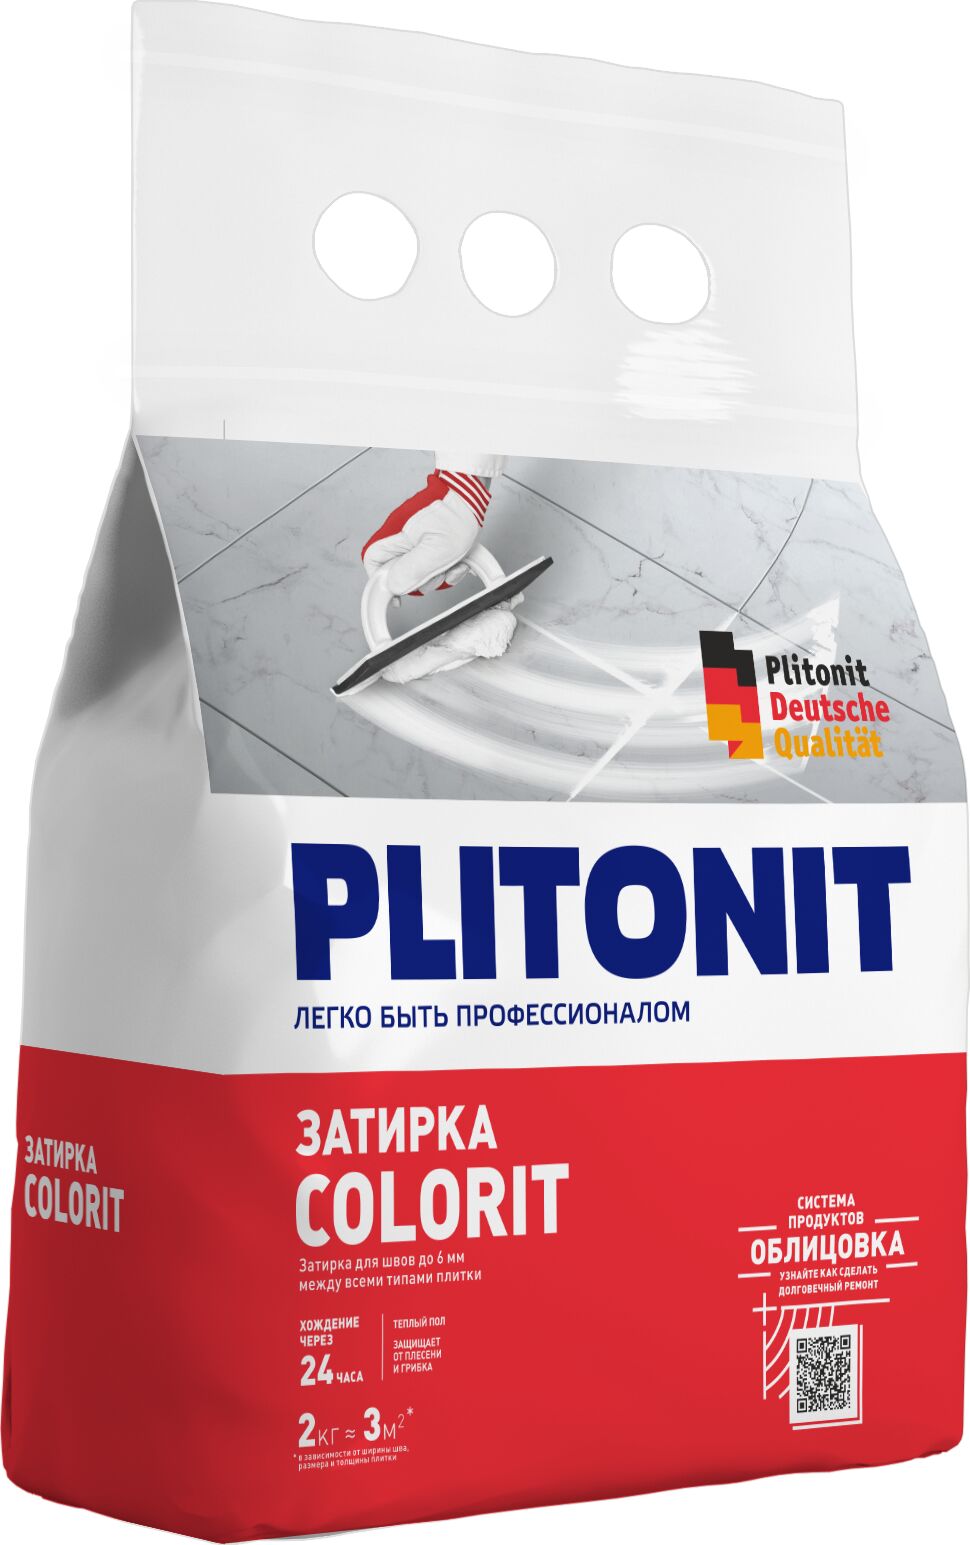 PLITONIT Colorit затирка между всеми типами плитки (1,5-6 мм) СИНЯЯ-2 , PLITONIT Colorit затирка между всеми типами плитки (1,5-6 мм) СИНЯЯ-2 